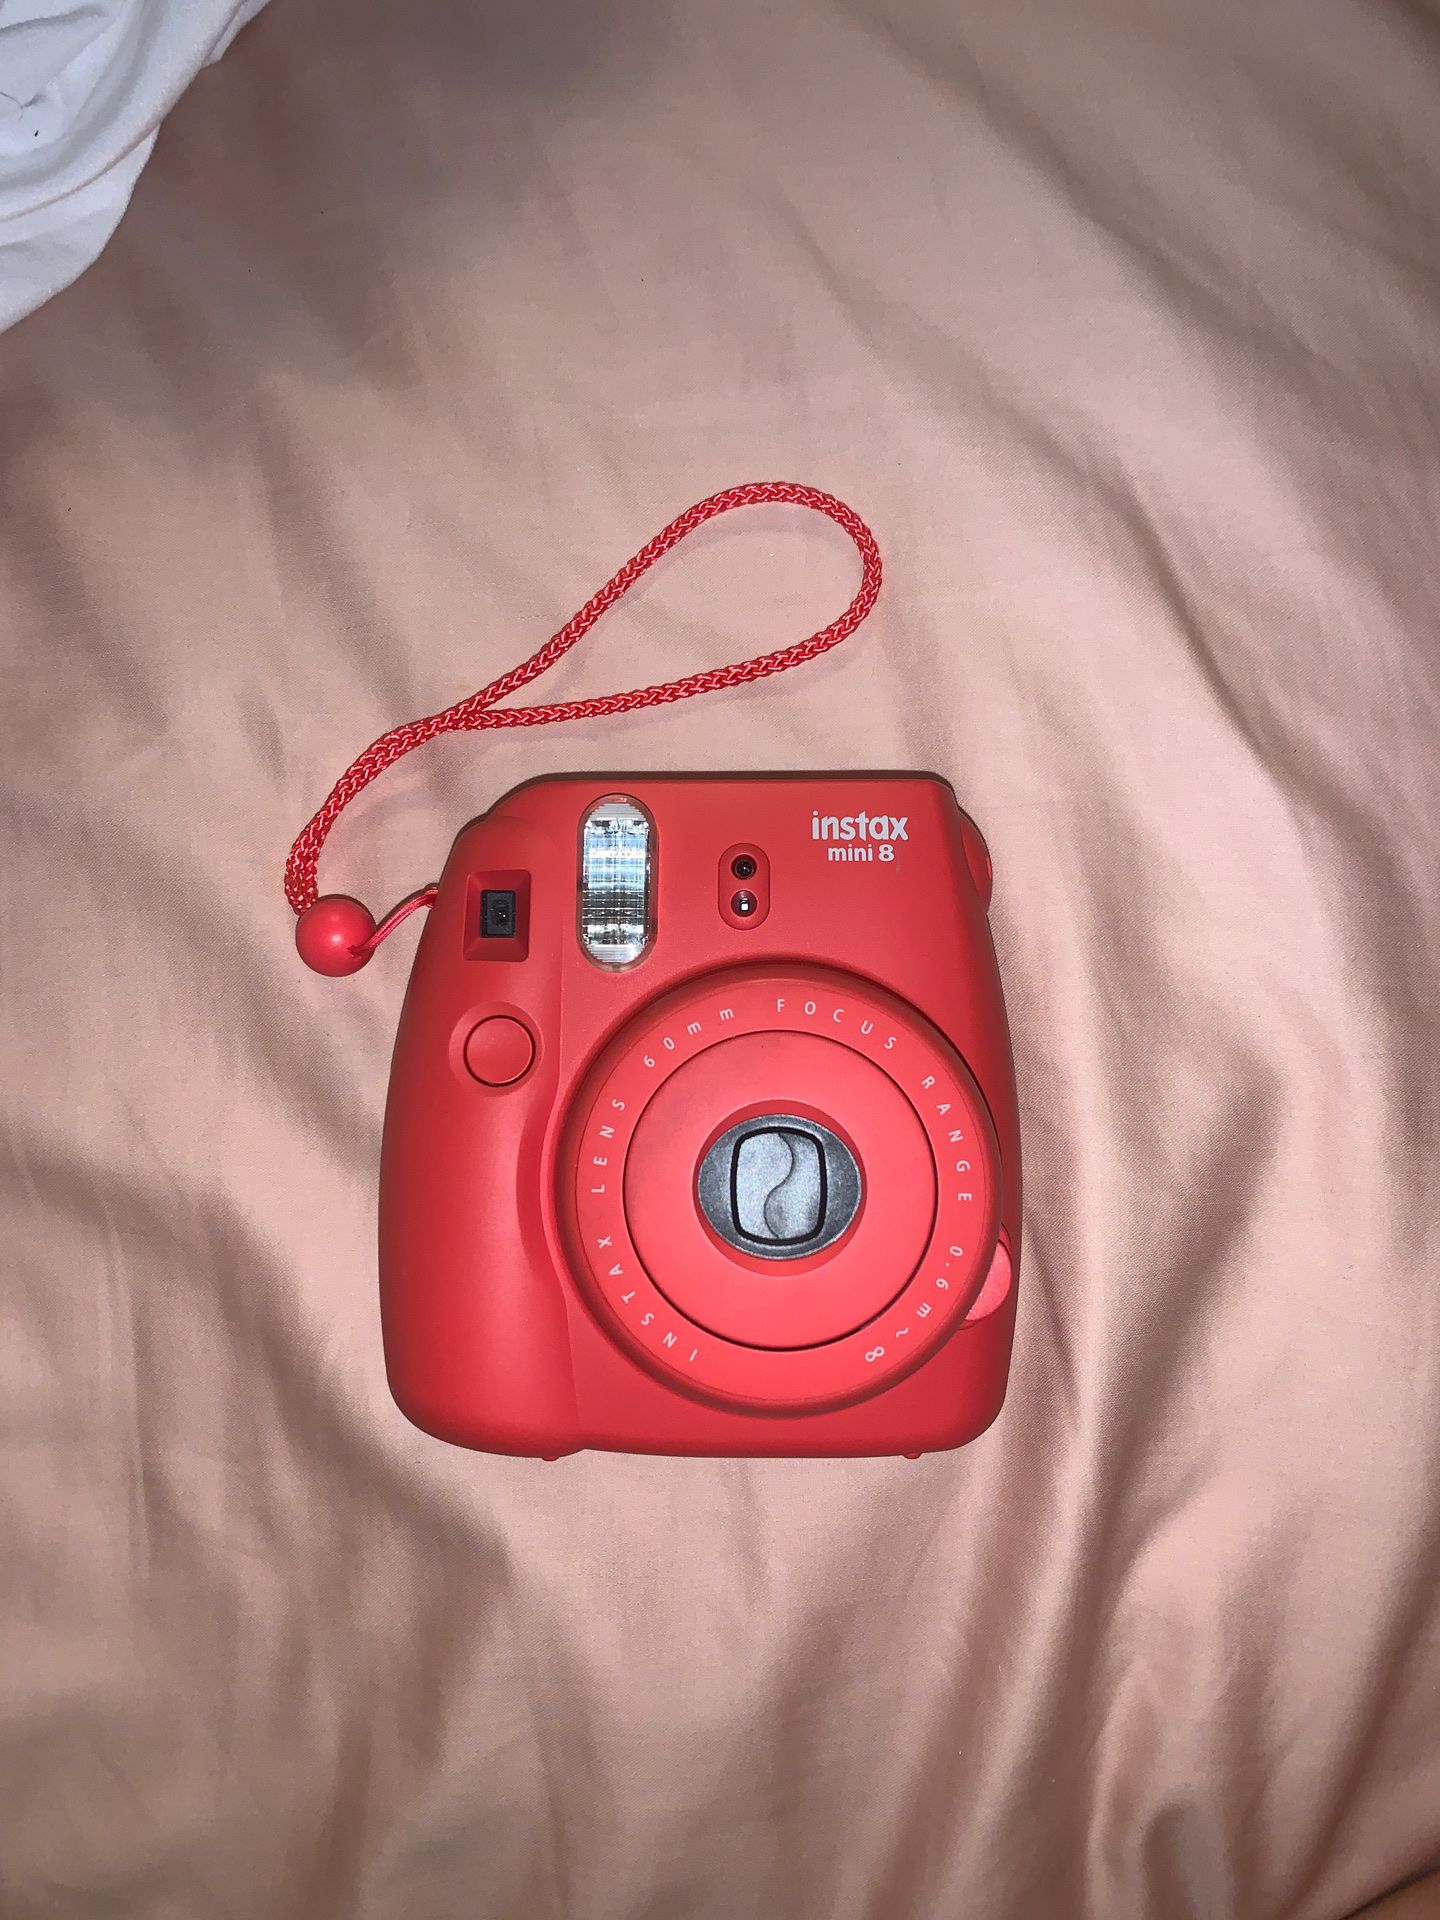 Instax mini 8 - polaroid camera!